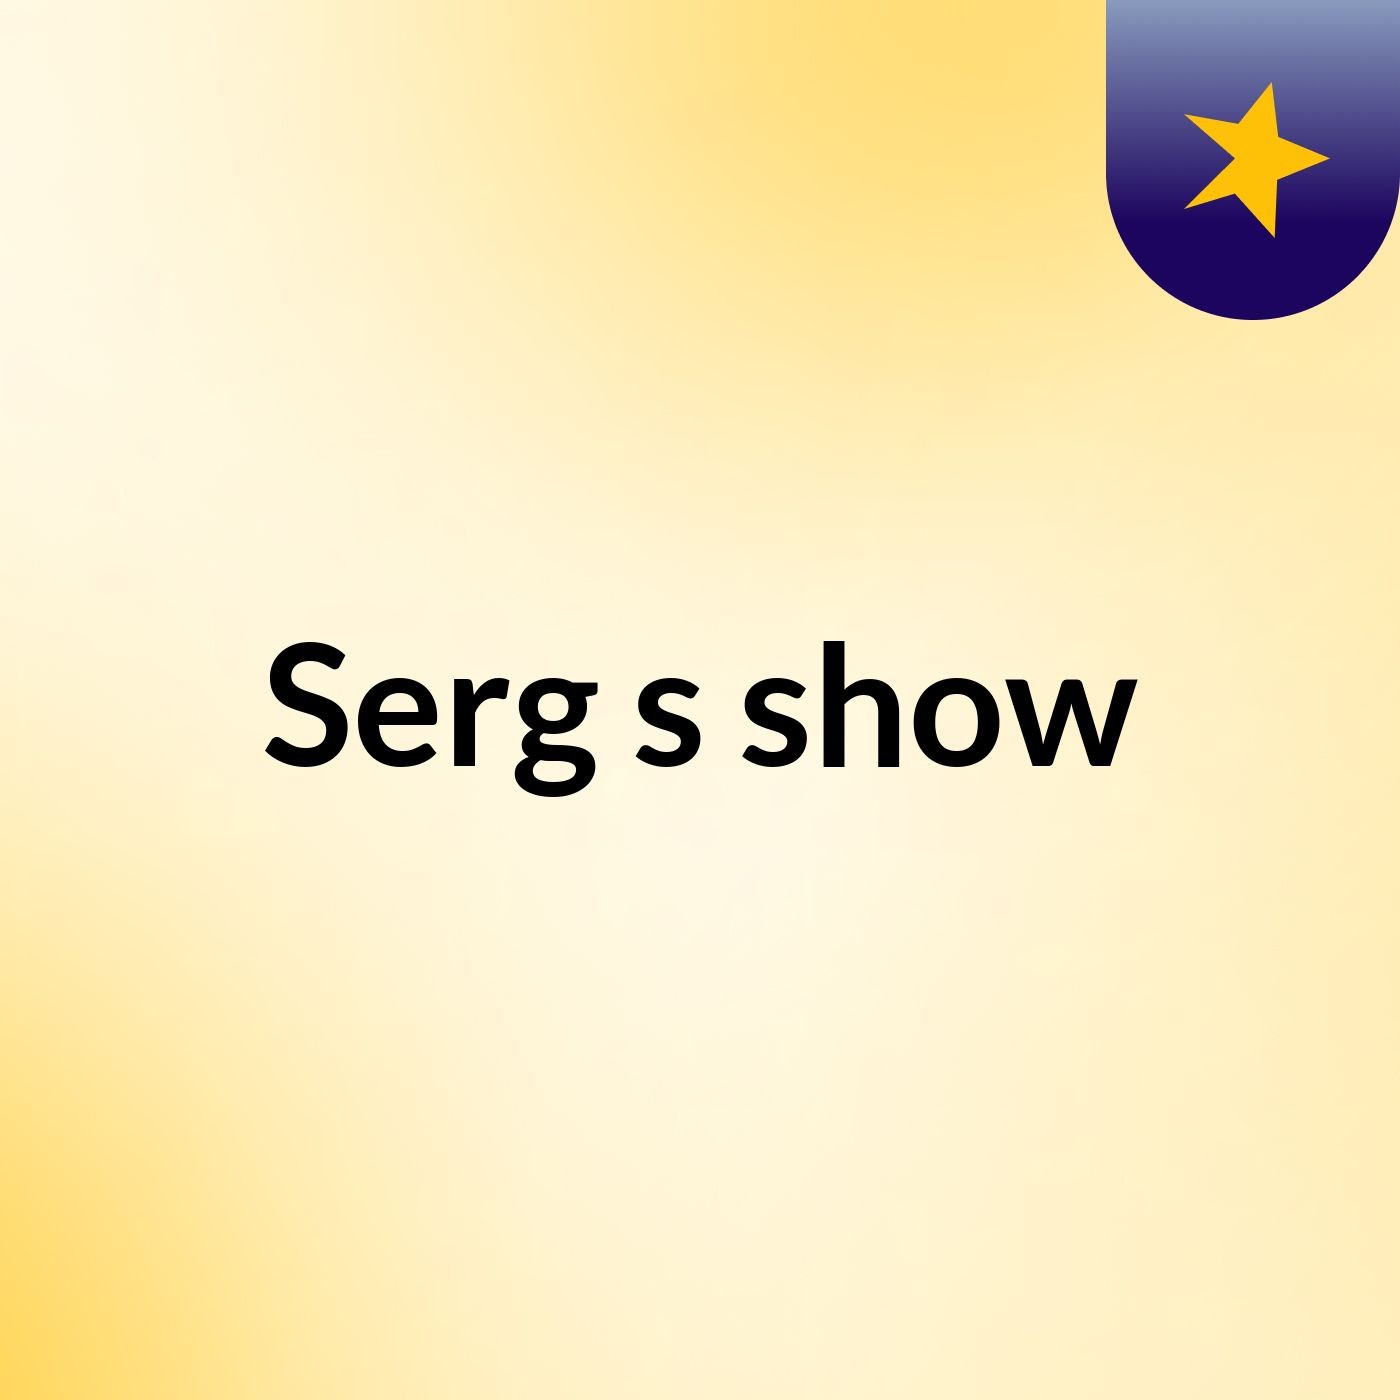 Serg's show